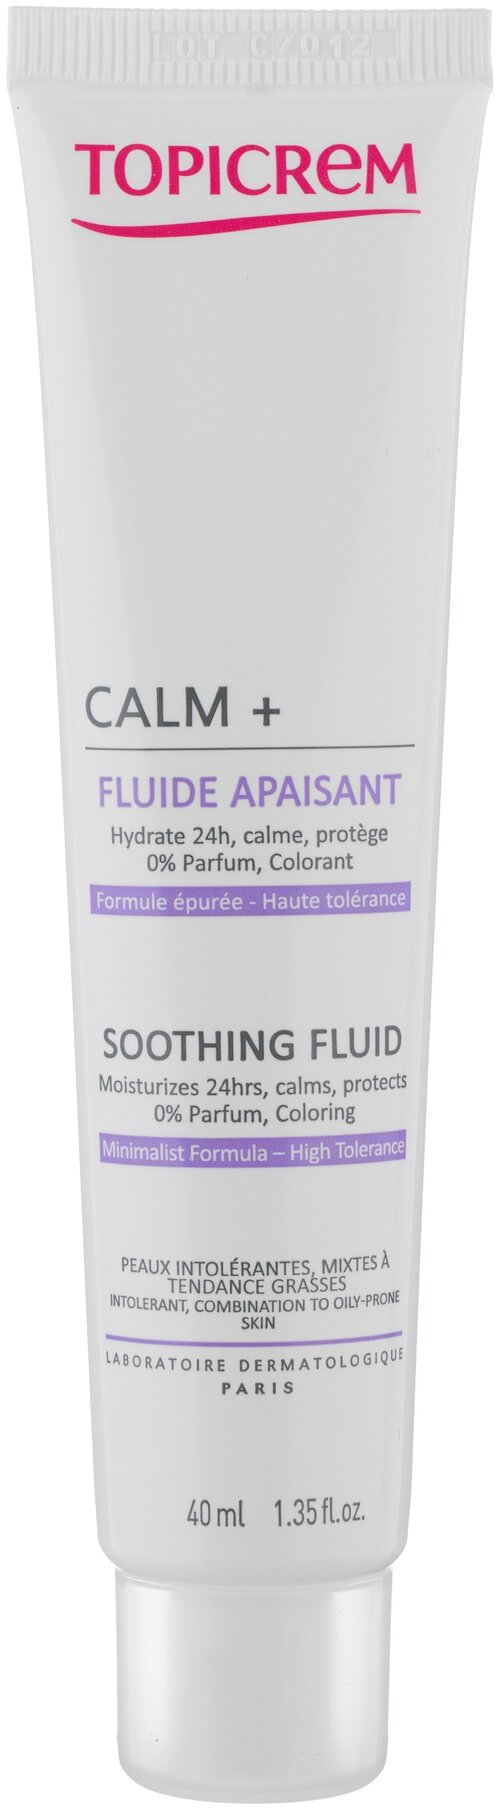 Topicrem Calm+ Soothing Fluid Успокаивающий флюид для лица и шеи, 40 мл